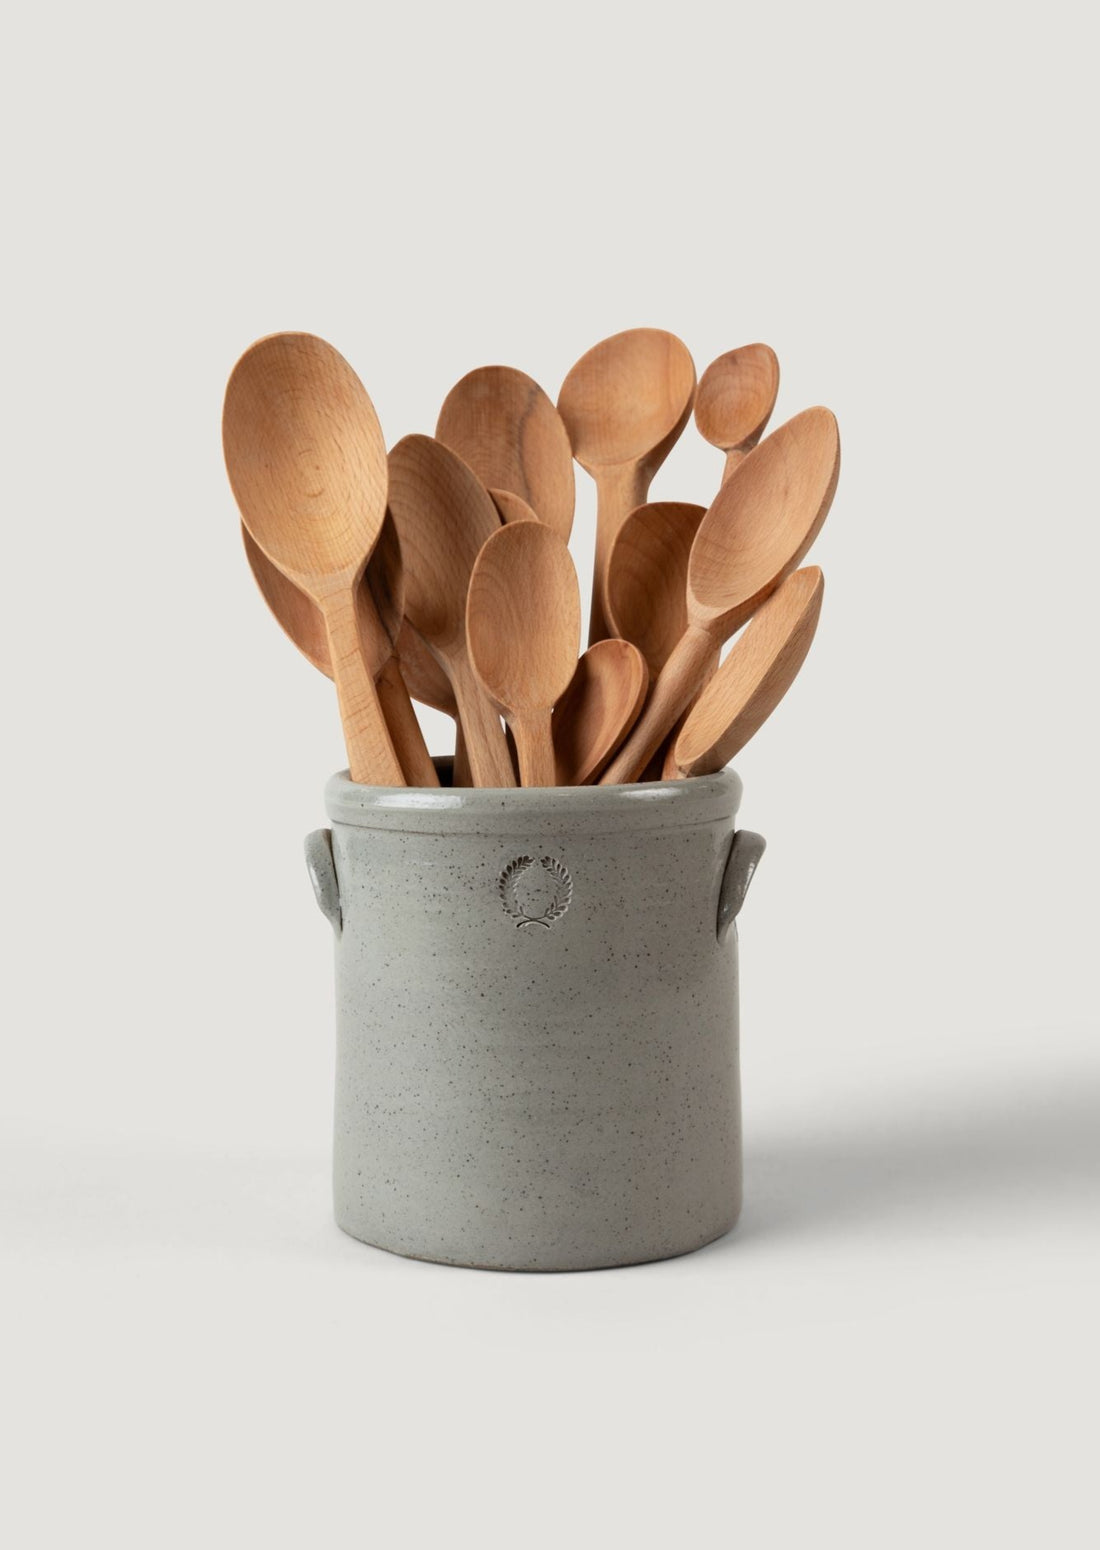 Set of 13 Kitchen Utensil Spoons Shown in Farmhouse Pottery Grey Stoneware Crock